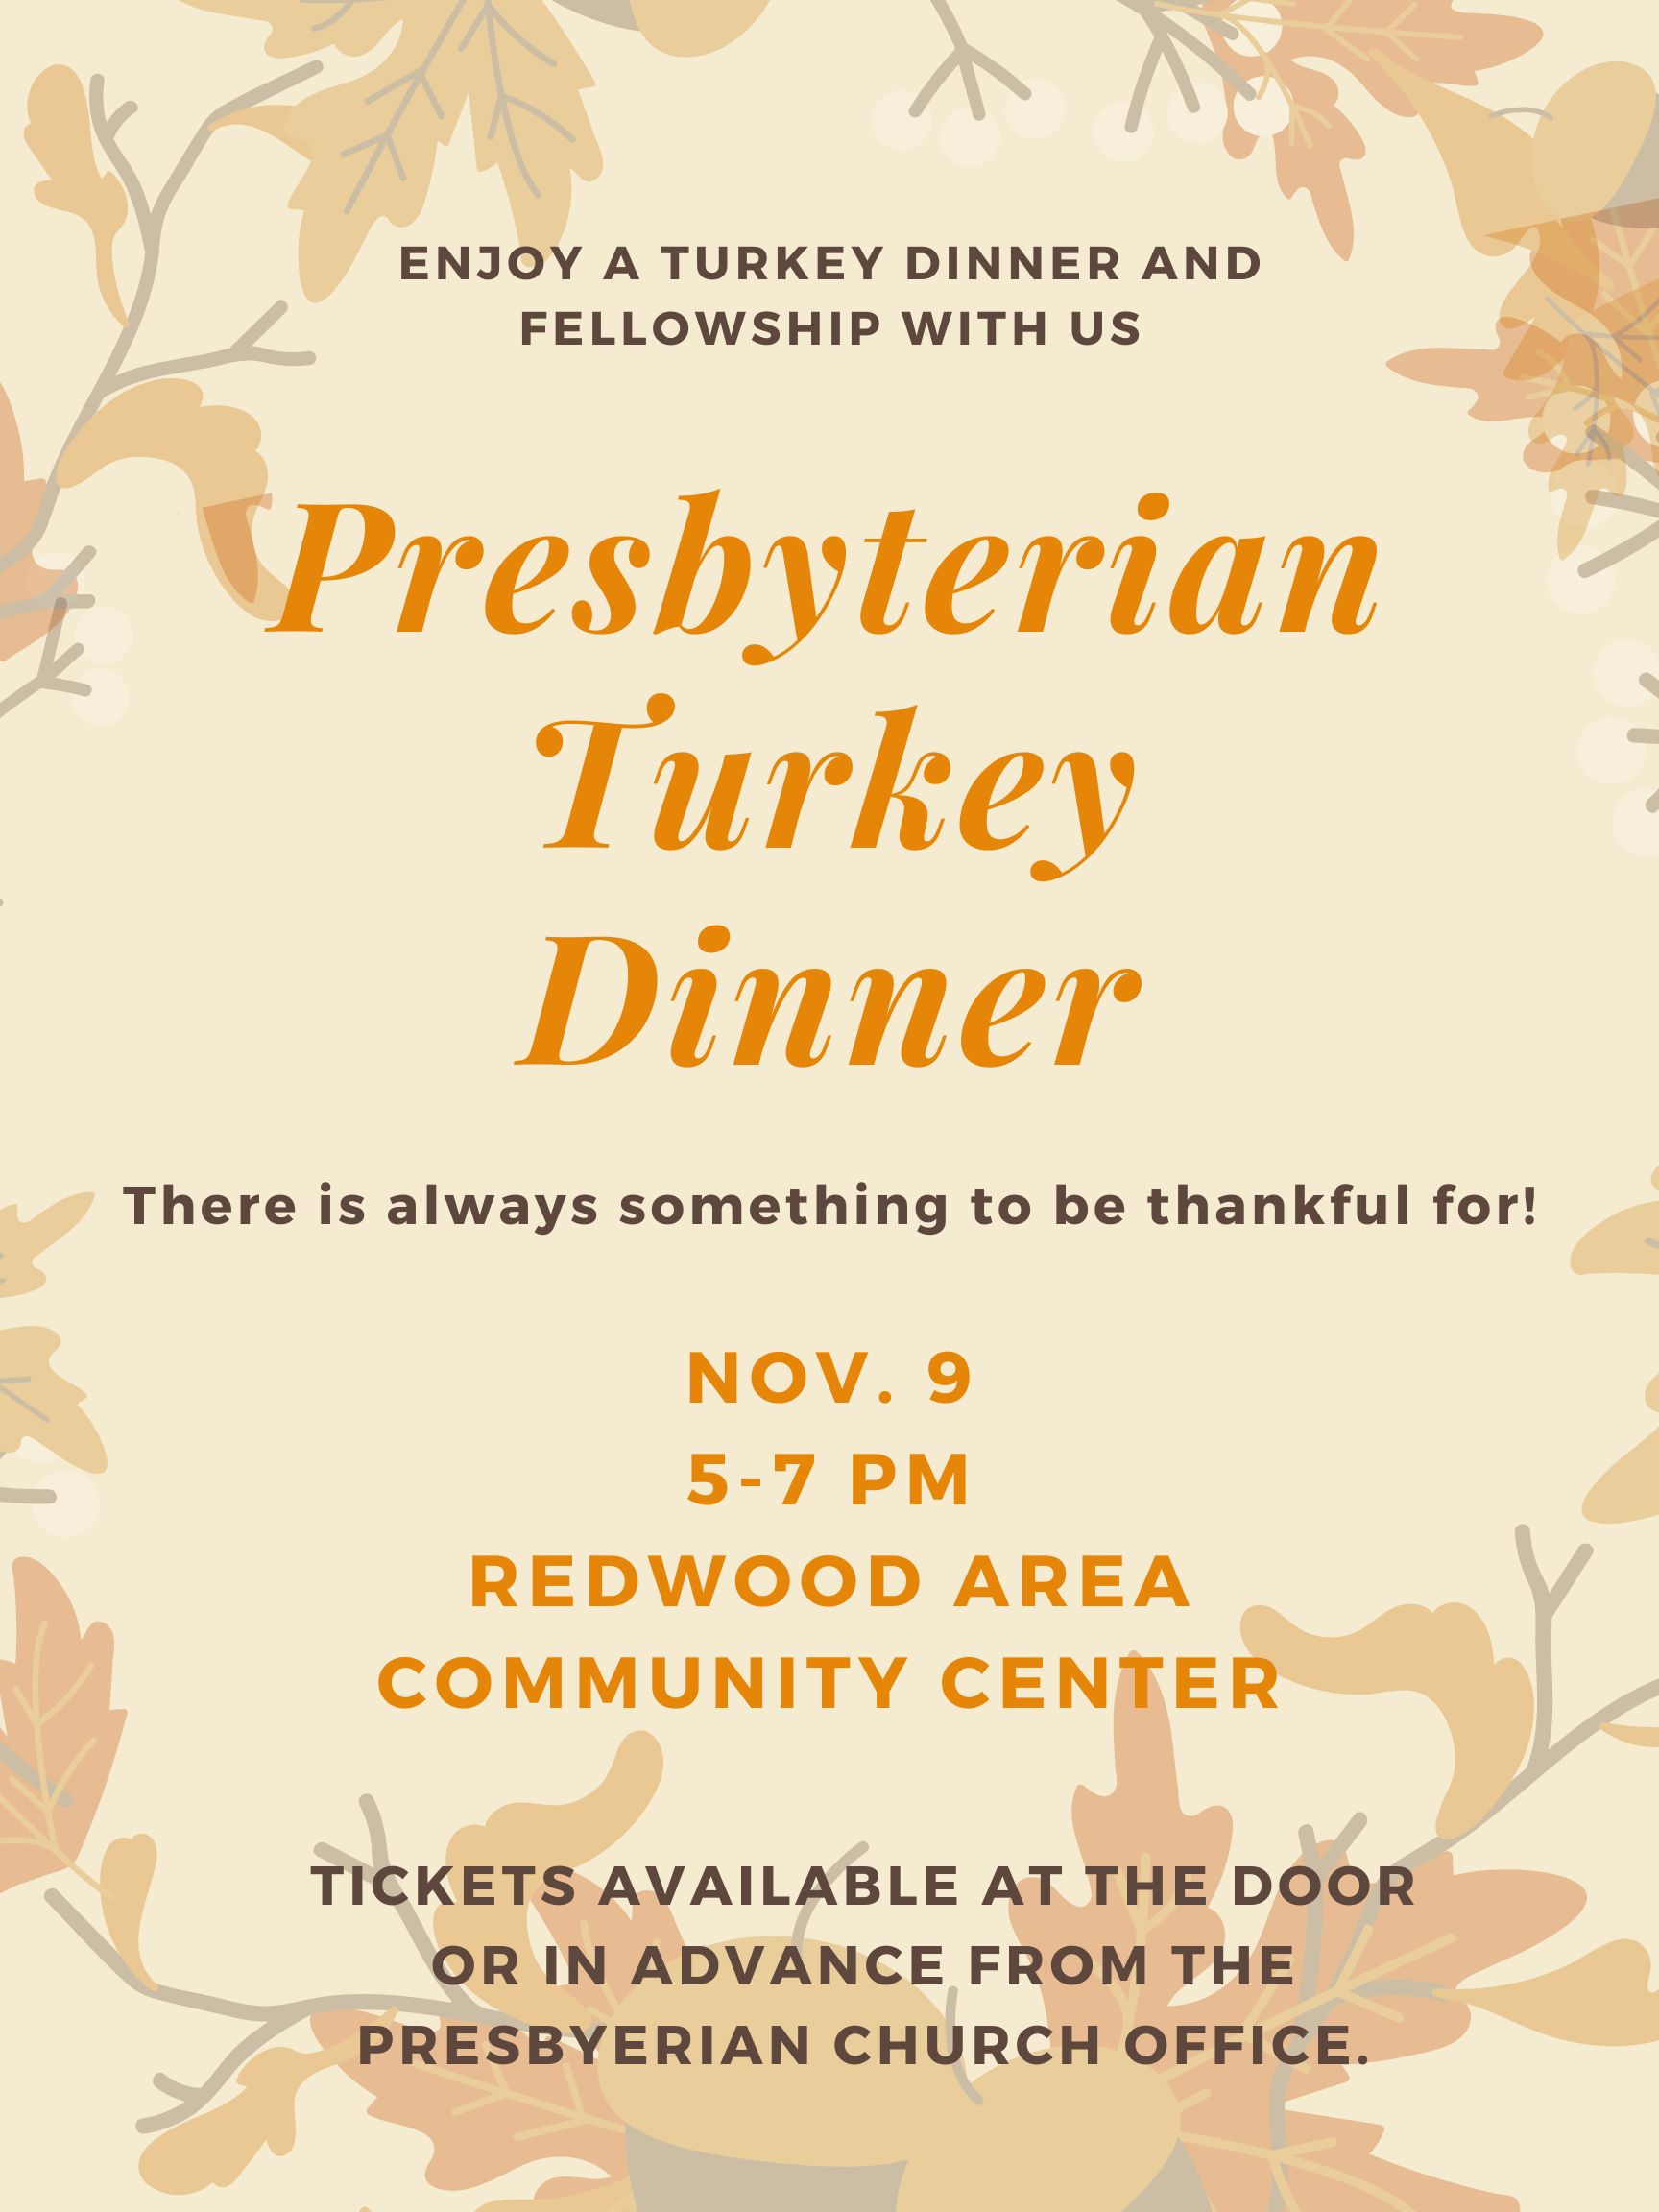 <h1 class="tribe-events-single-event-title">Presbyterian Turkey Dinner</h1>